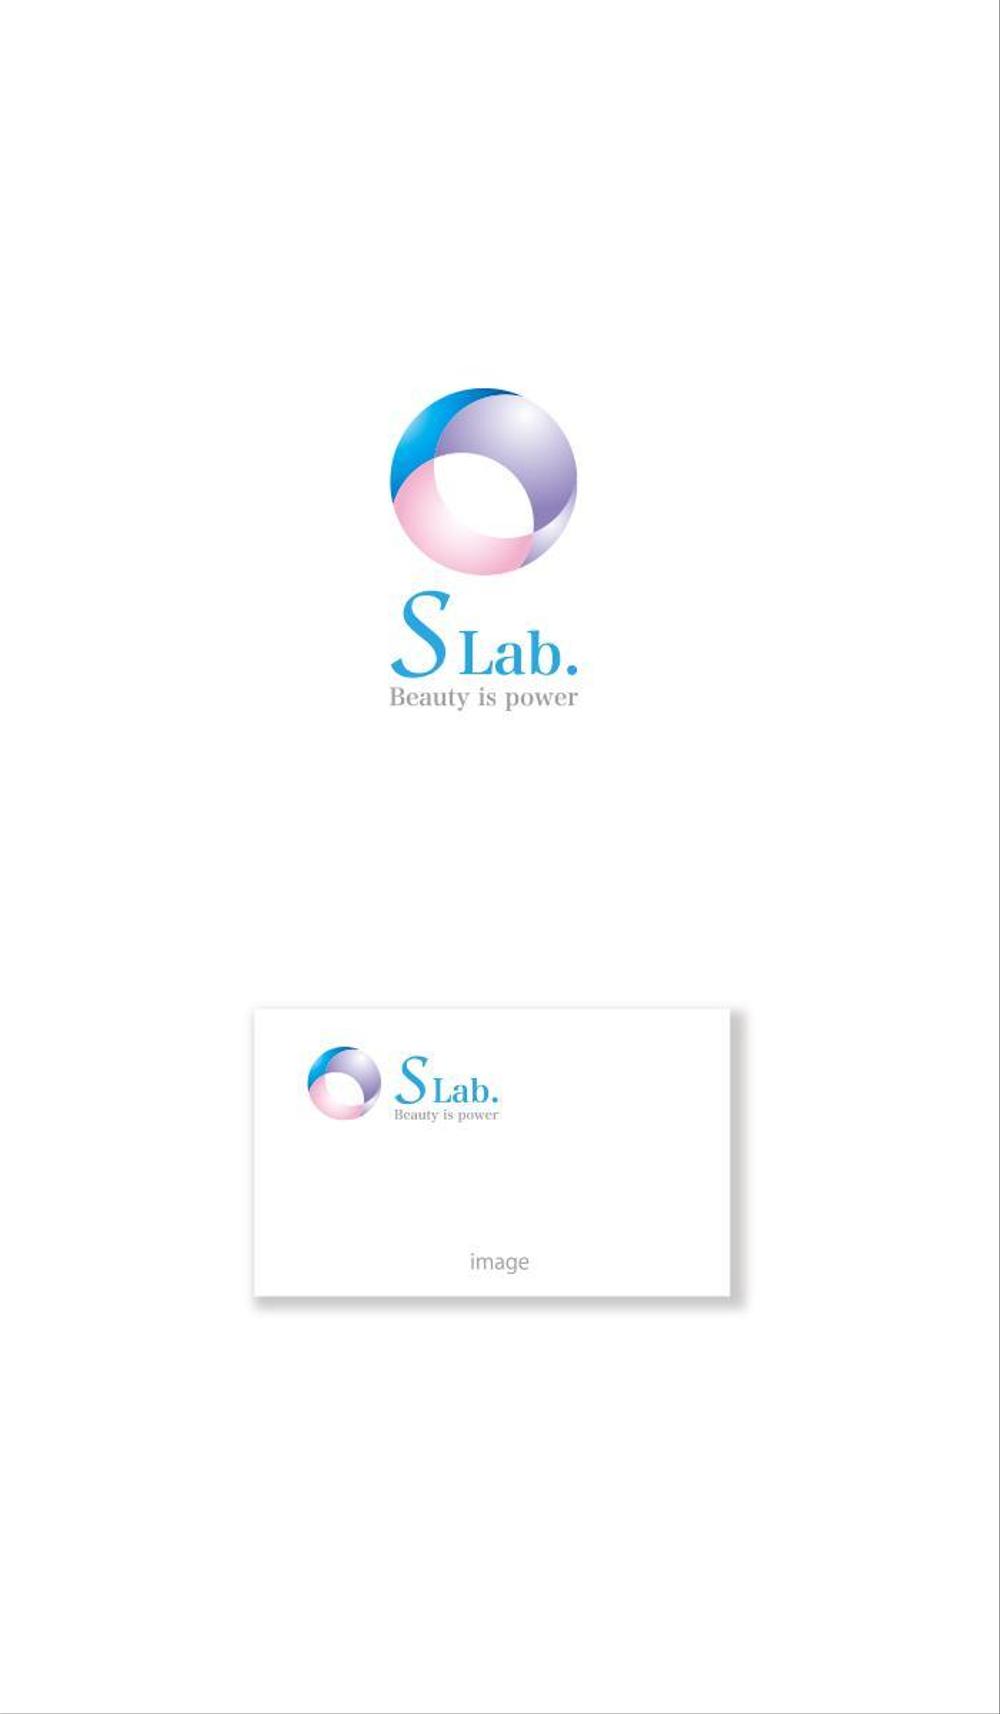 S Lab. logo_serve.jpg